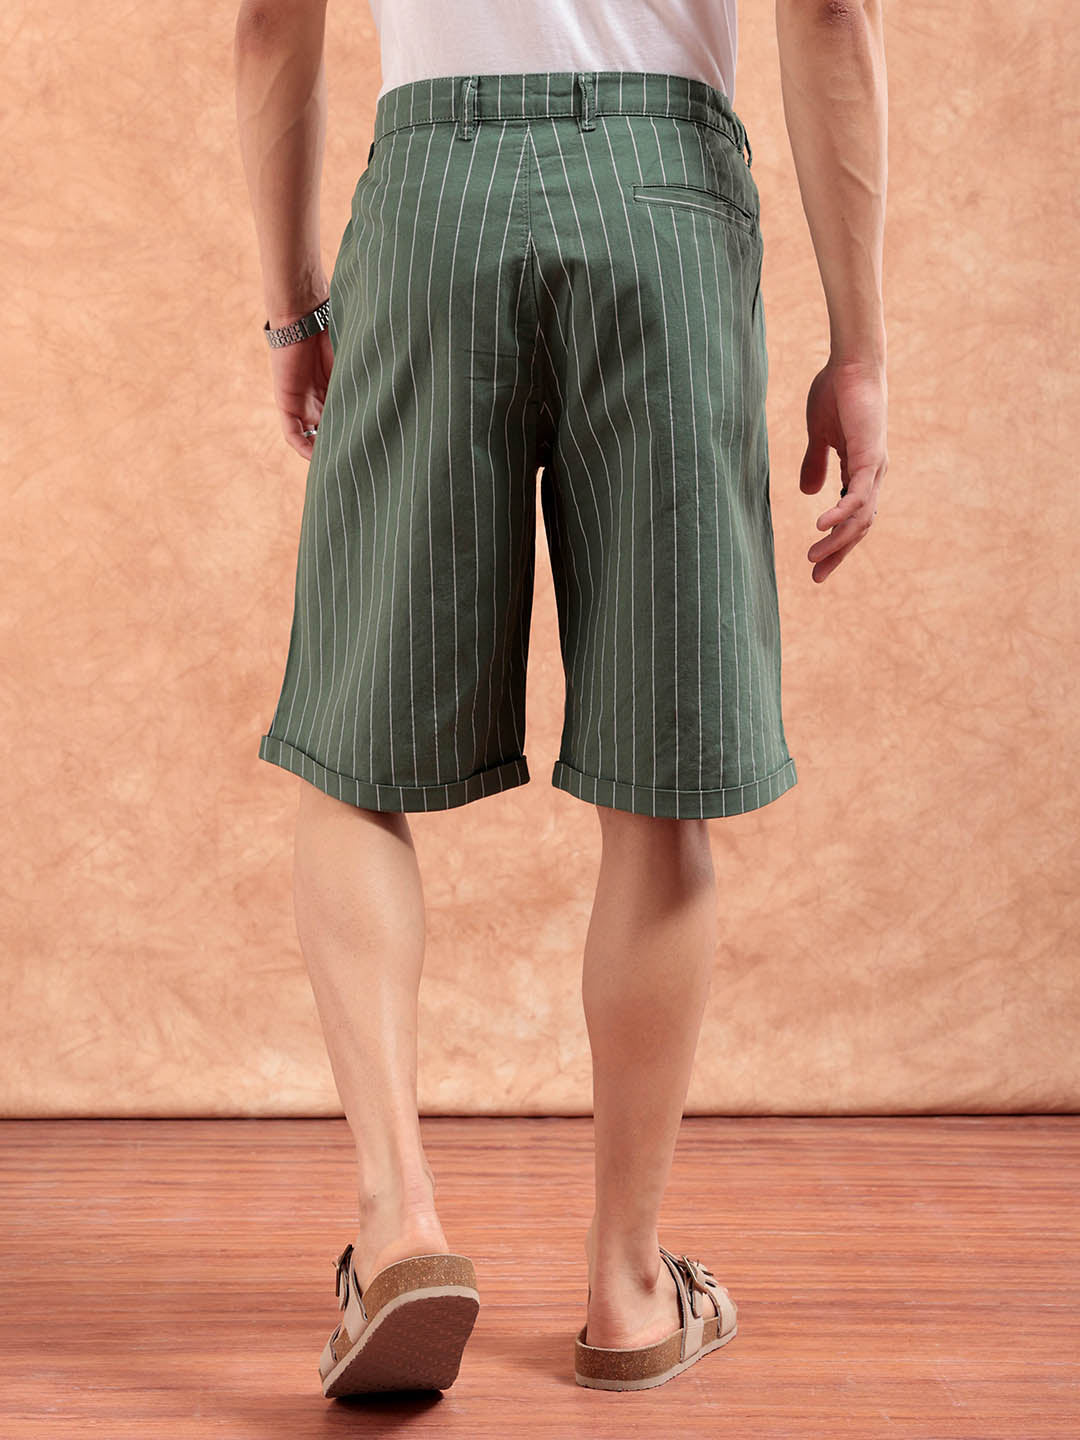 Shop Men Striped Shorts Online.